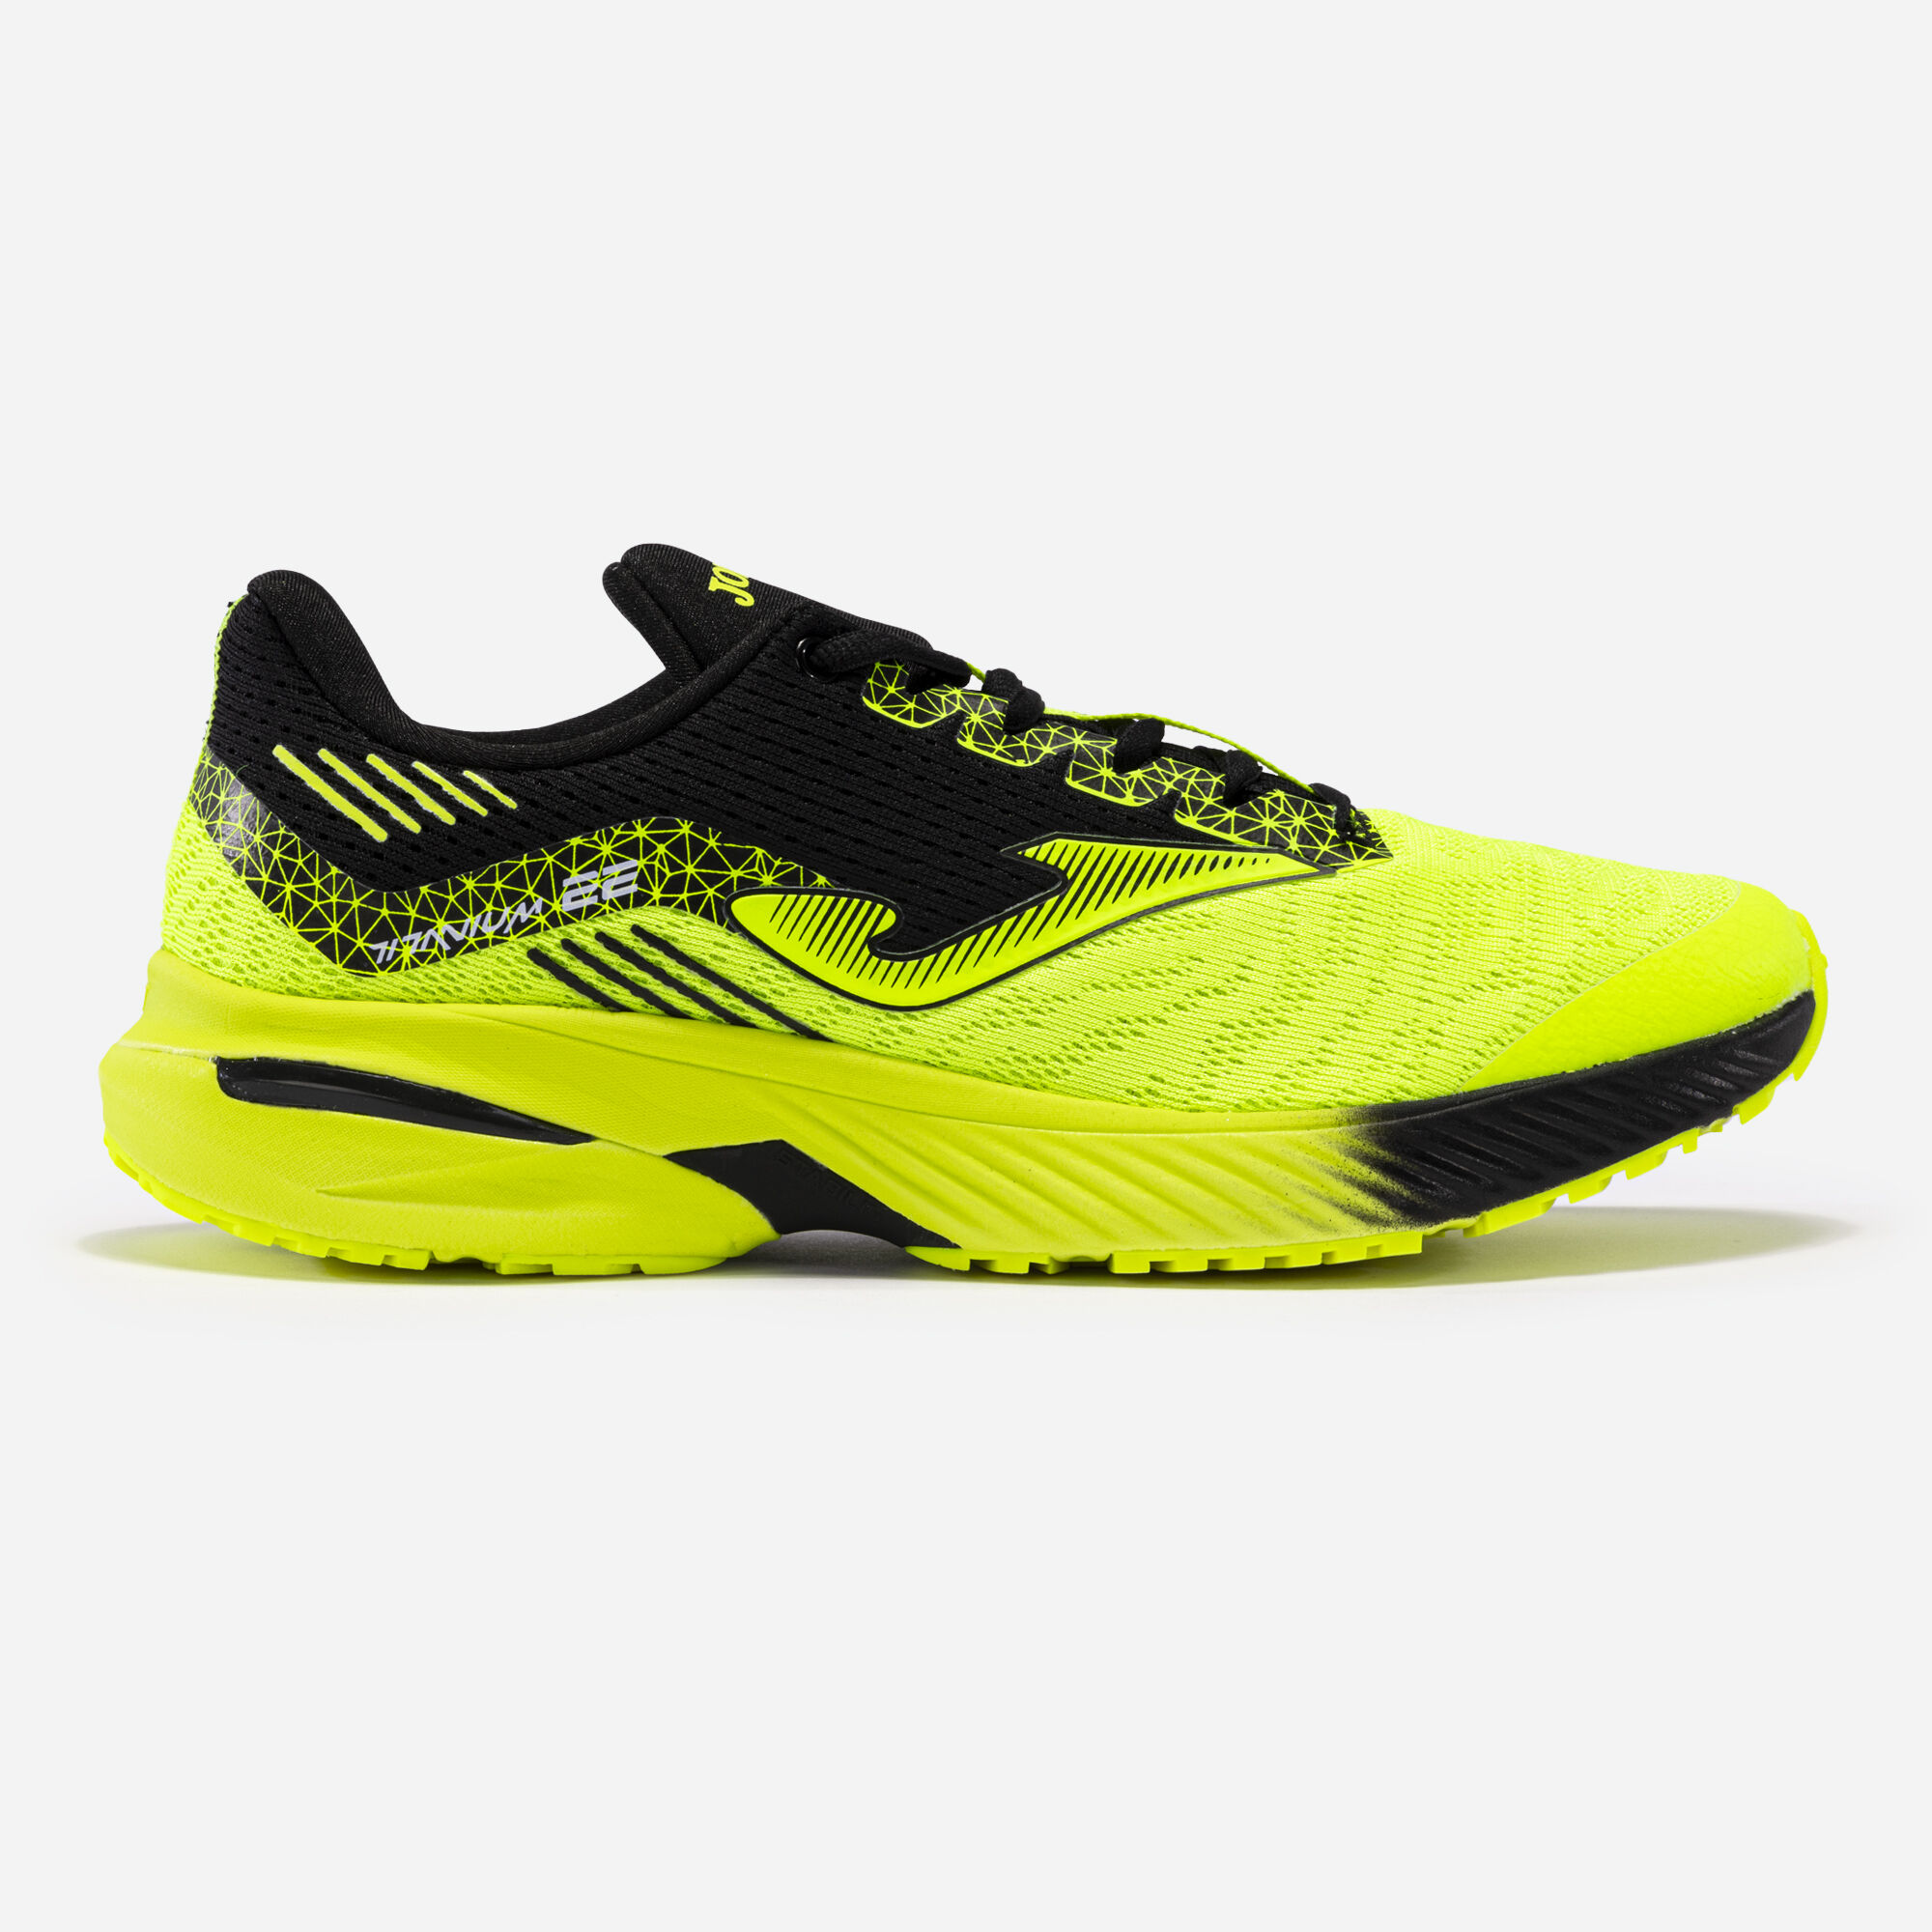 Pantofi sport alergare Titanium 23 bărbaȚi galben fosforescent negru